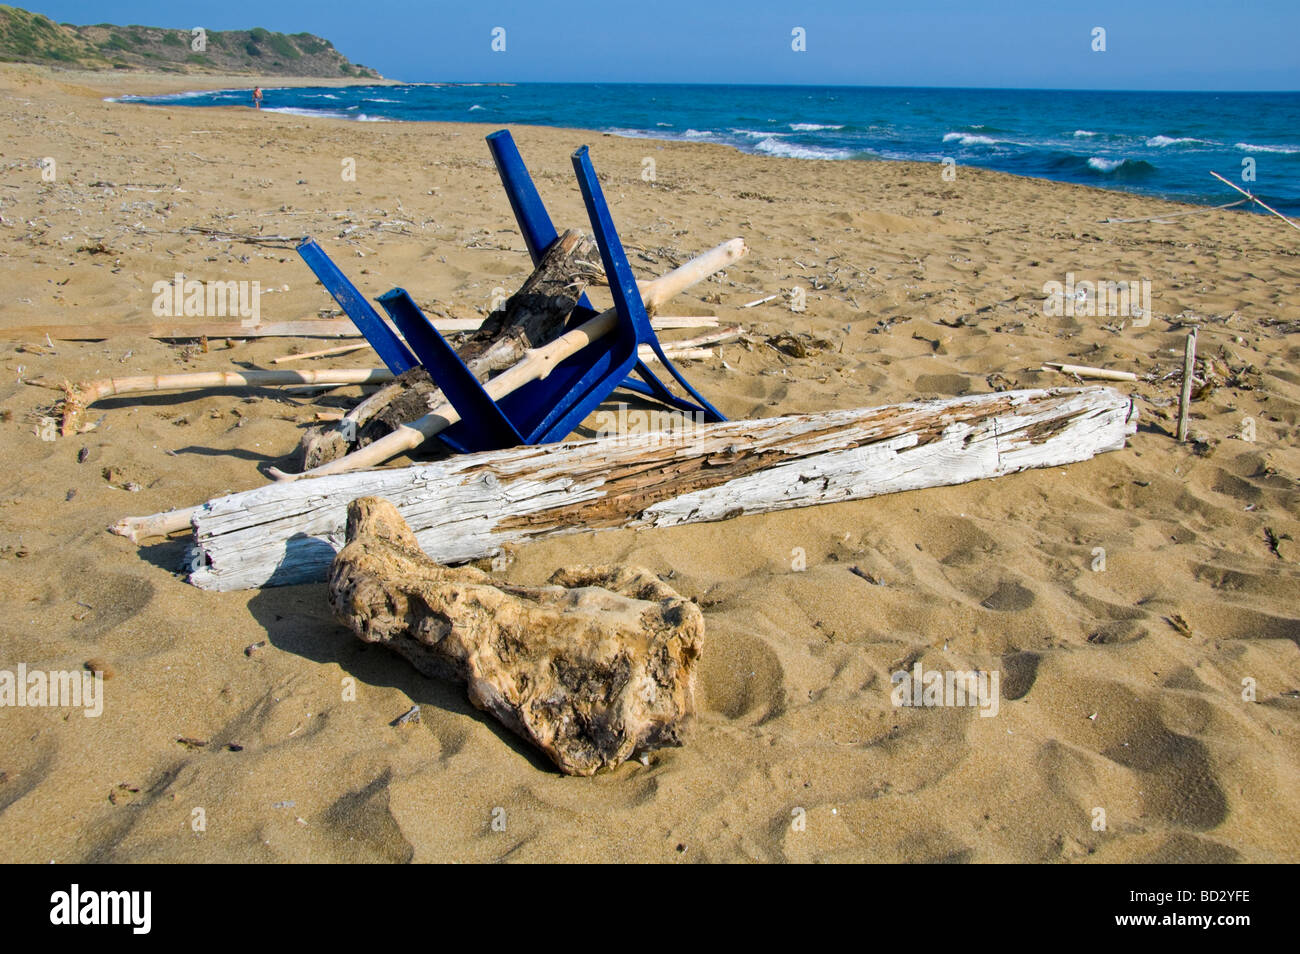 Flotsam rubbish and drift wood washed up on Mounda beach near Skala on the Greek Mediterranean island of Kefalonia Greece GR Stock Photo